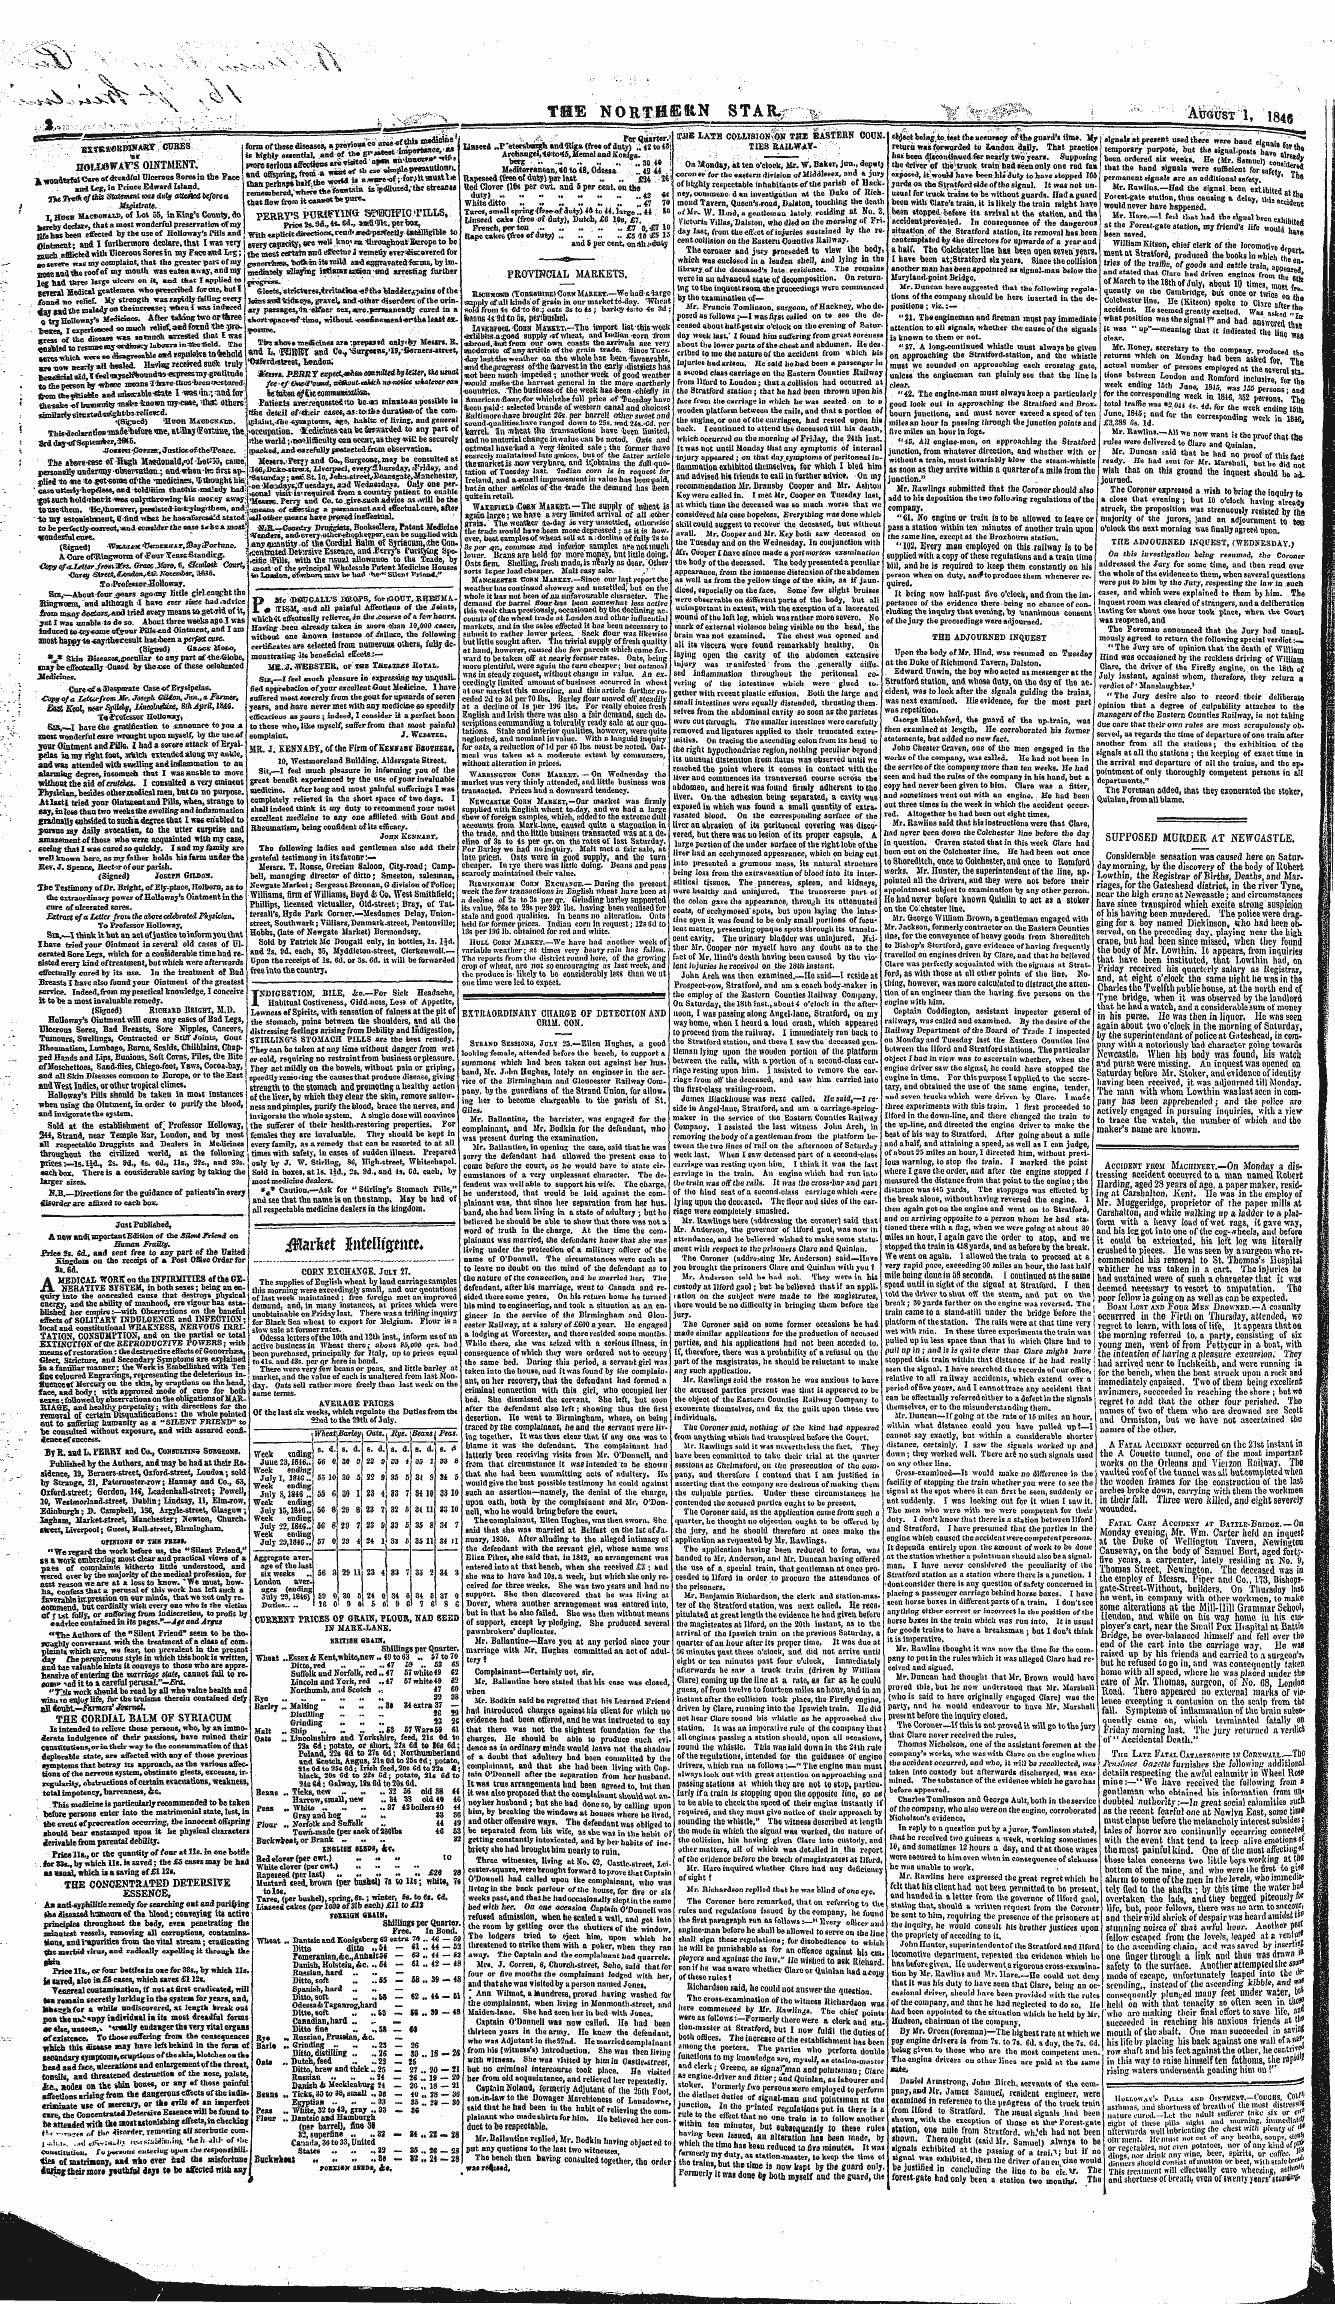 Northern Star (1837-1852): jS F Y, 2nd edition - ^Extrj^Bikw^Si' Cukes Bol3d0wafs Ointment;